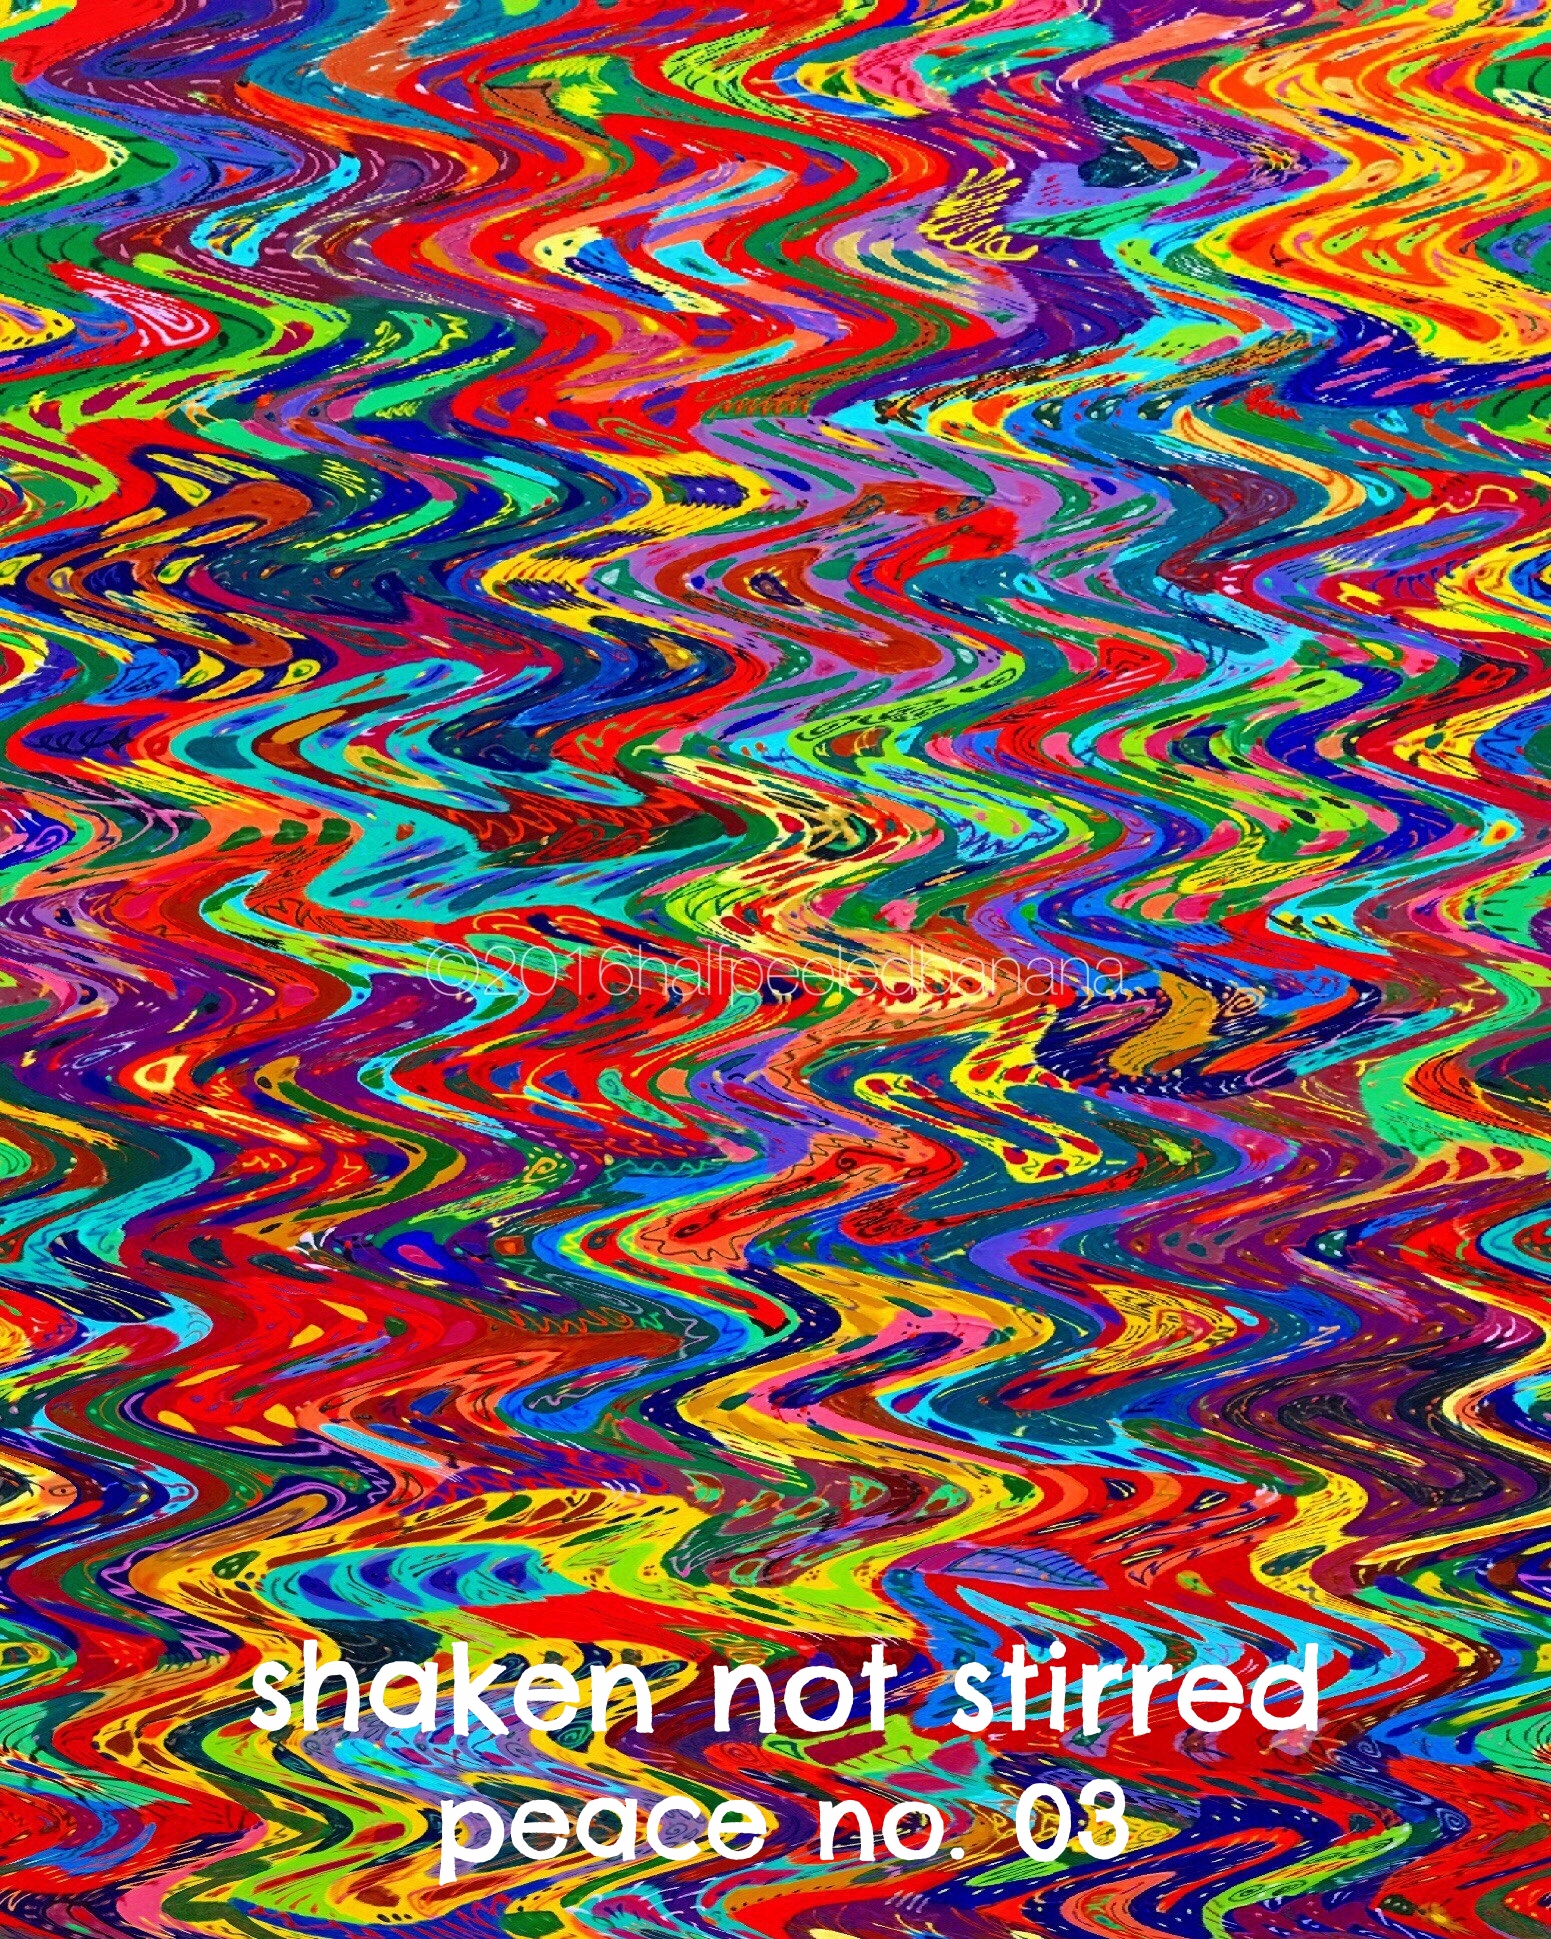 shaken not stirred - peace print no. 03